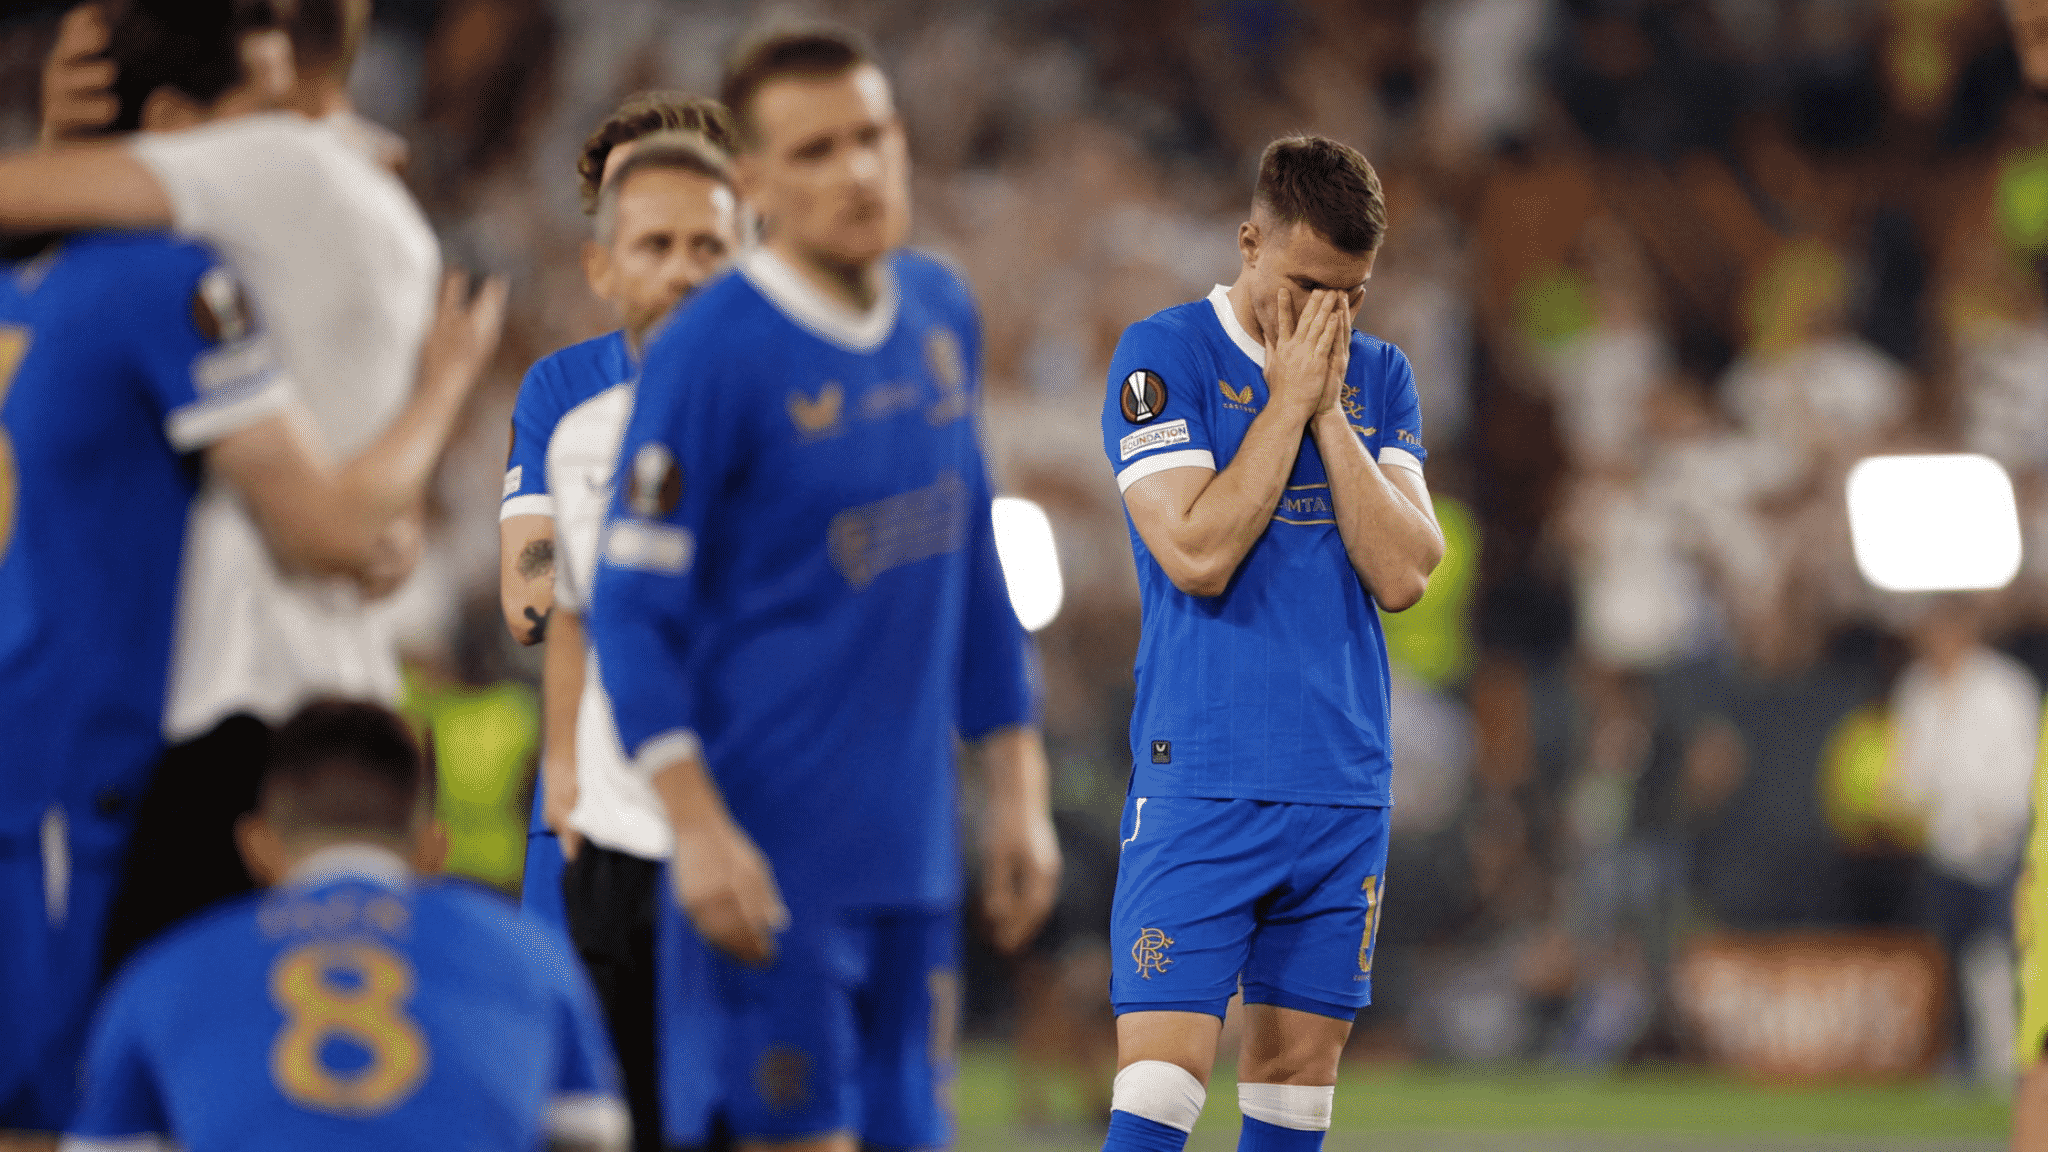 Europa League Final: Van Bronckhorst says Ramsey took responsibility despite shootout miss, My Football Facts